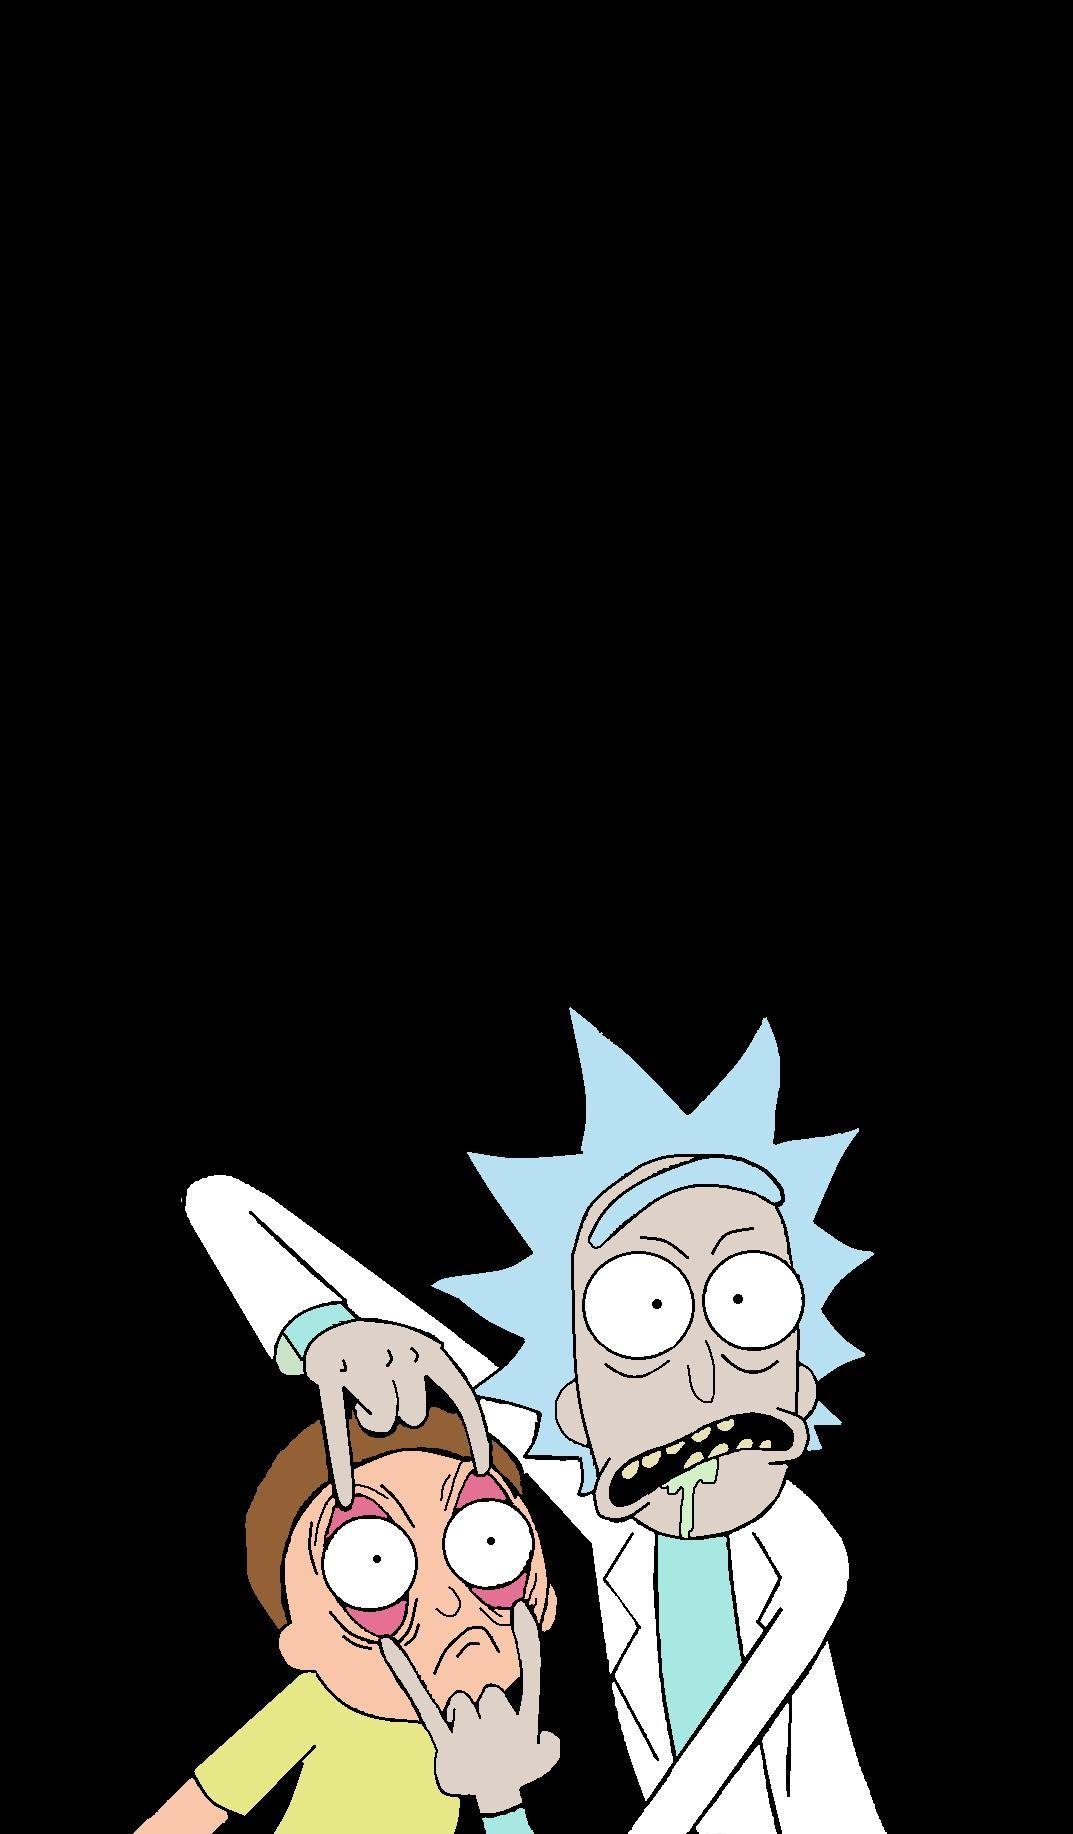 Rick And Morty Lockscreen Wallpaper Imgur regarding The Most